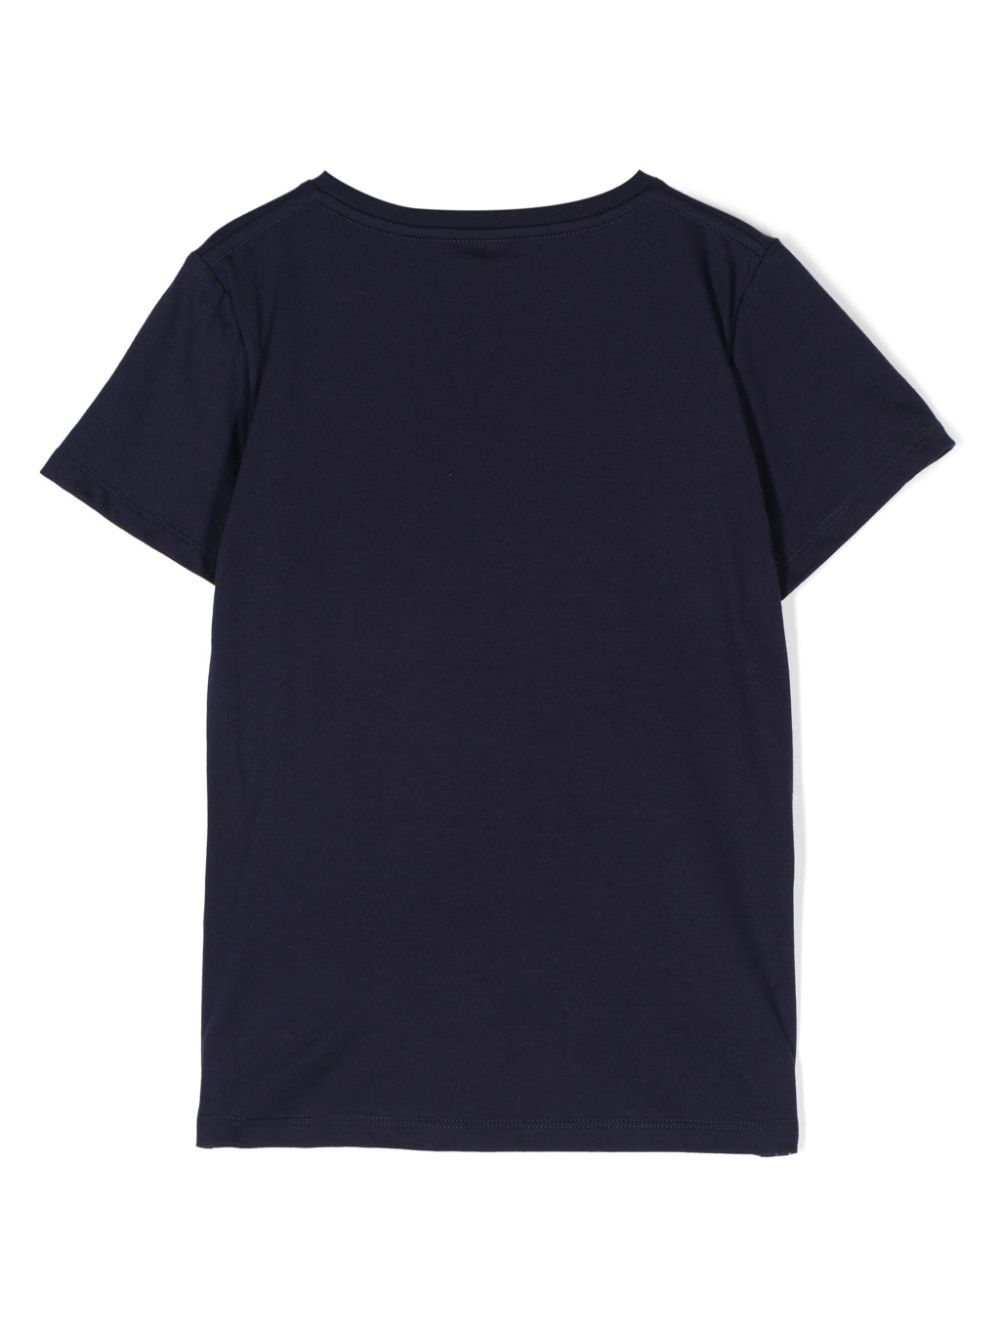 T-shirt unisex in cotone blu navy con logo